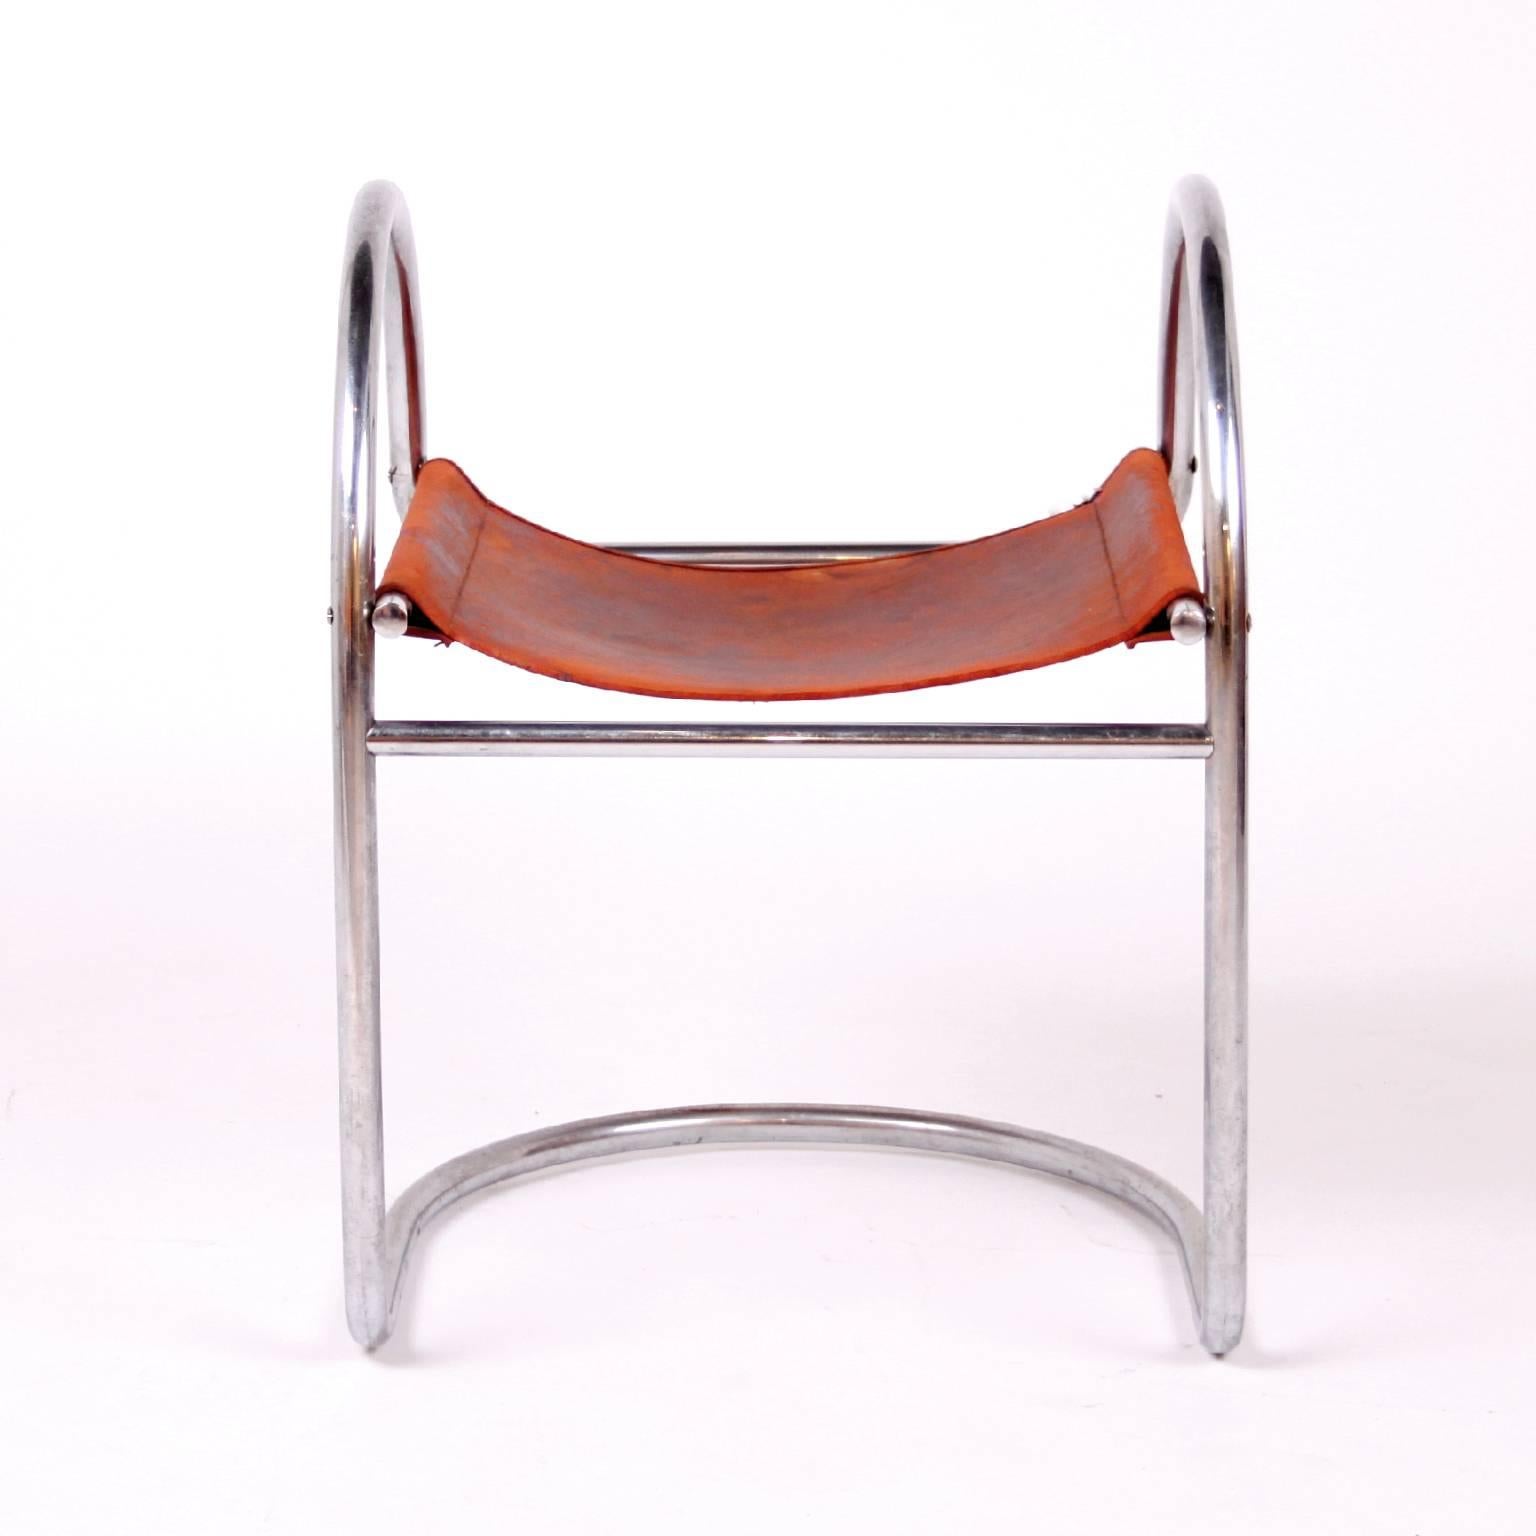 MOGENS LASSEN & FRITZ HANSEN - MID-CENTURY MODERN DESIGN.

Extremely rare stool chair designed by Mogens Lassen, 1933.

Manufactured by Fritz Hansen, Denmark, 1933.

Materials: Chromium-plated tubular steel, original leather.

Size: 64.4 x 49.5 x 49